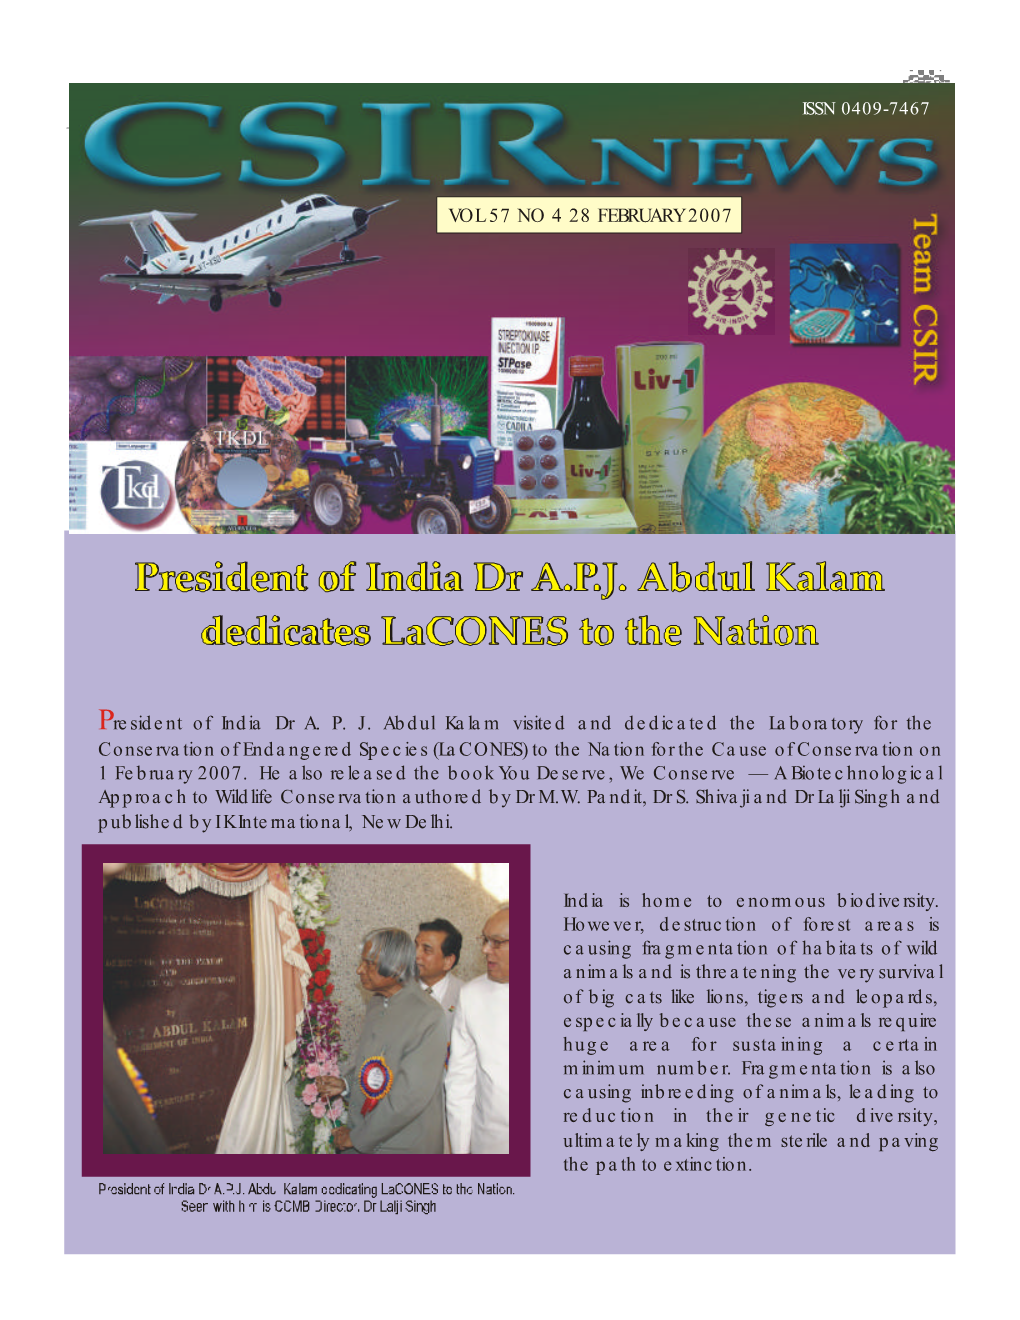 President of India Dr APJ Abdul Kalam Dedicates Lacones to the Nation